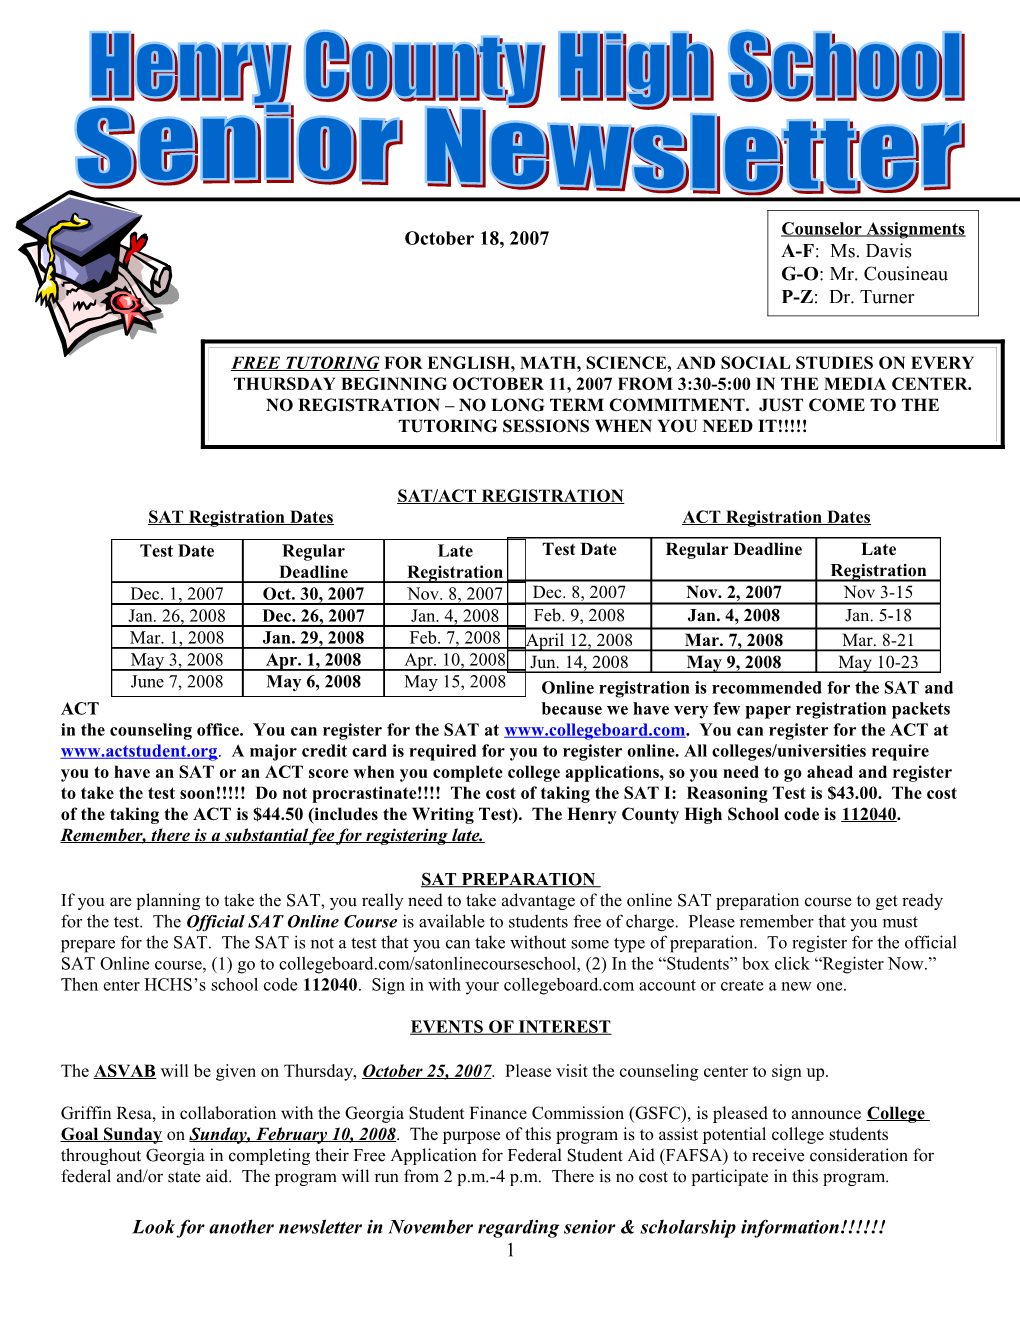 Look for Another Newsletter in November Regarding Senior & Scholarship Information